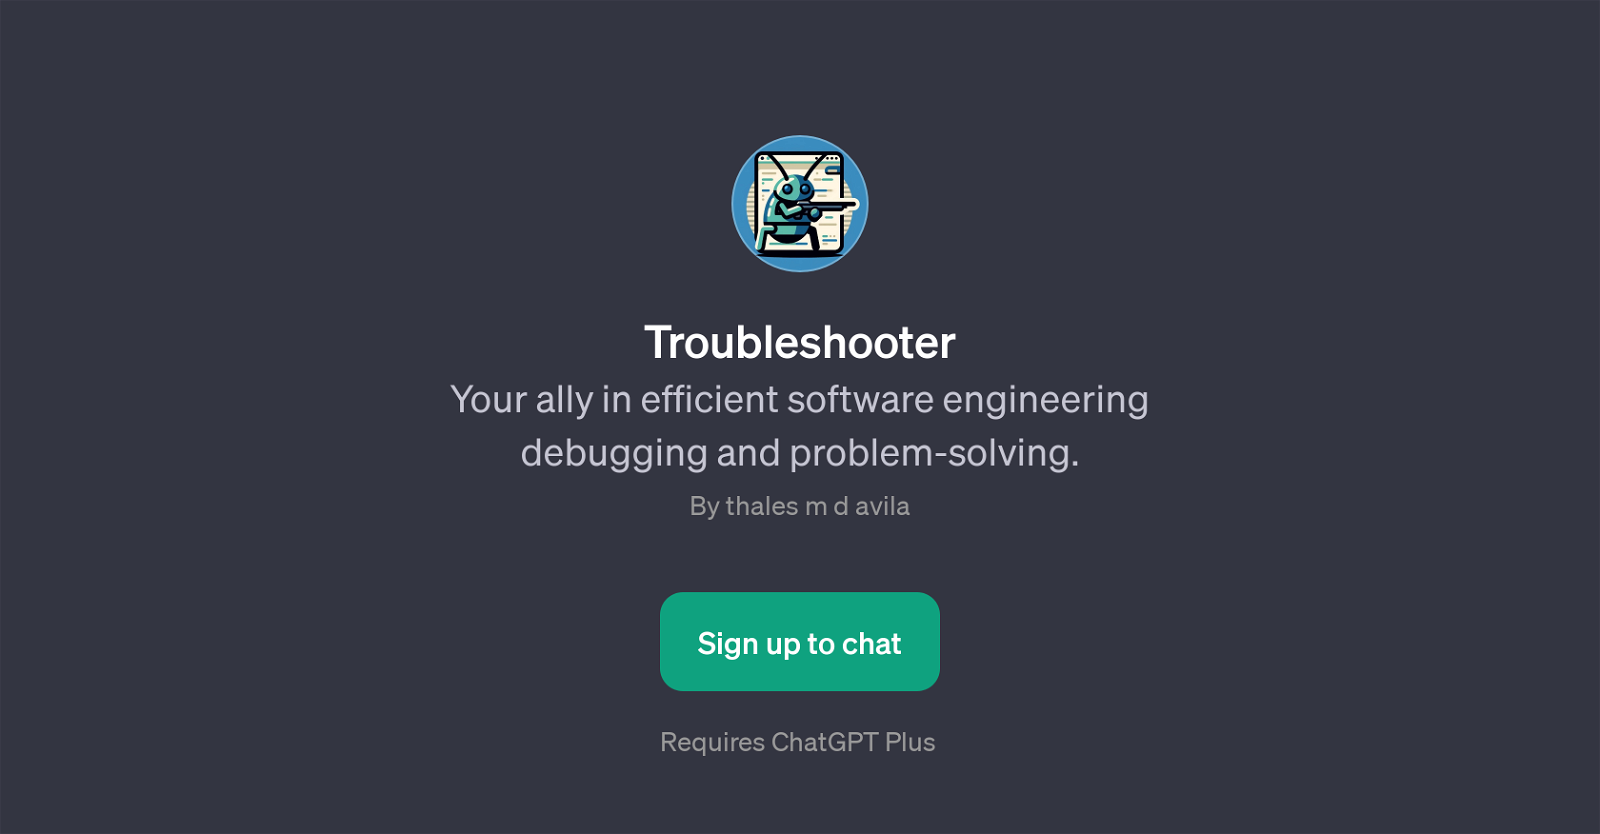 Troubleshooter website